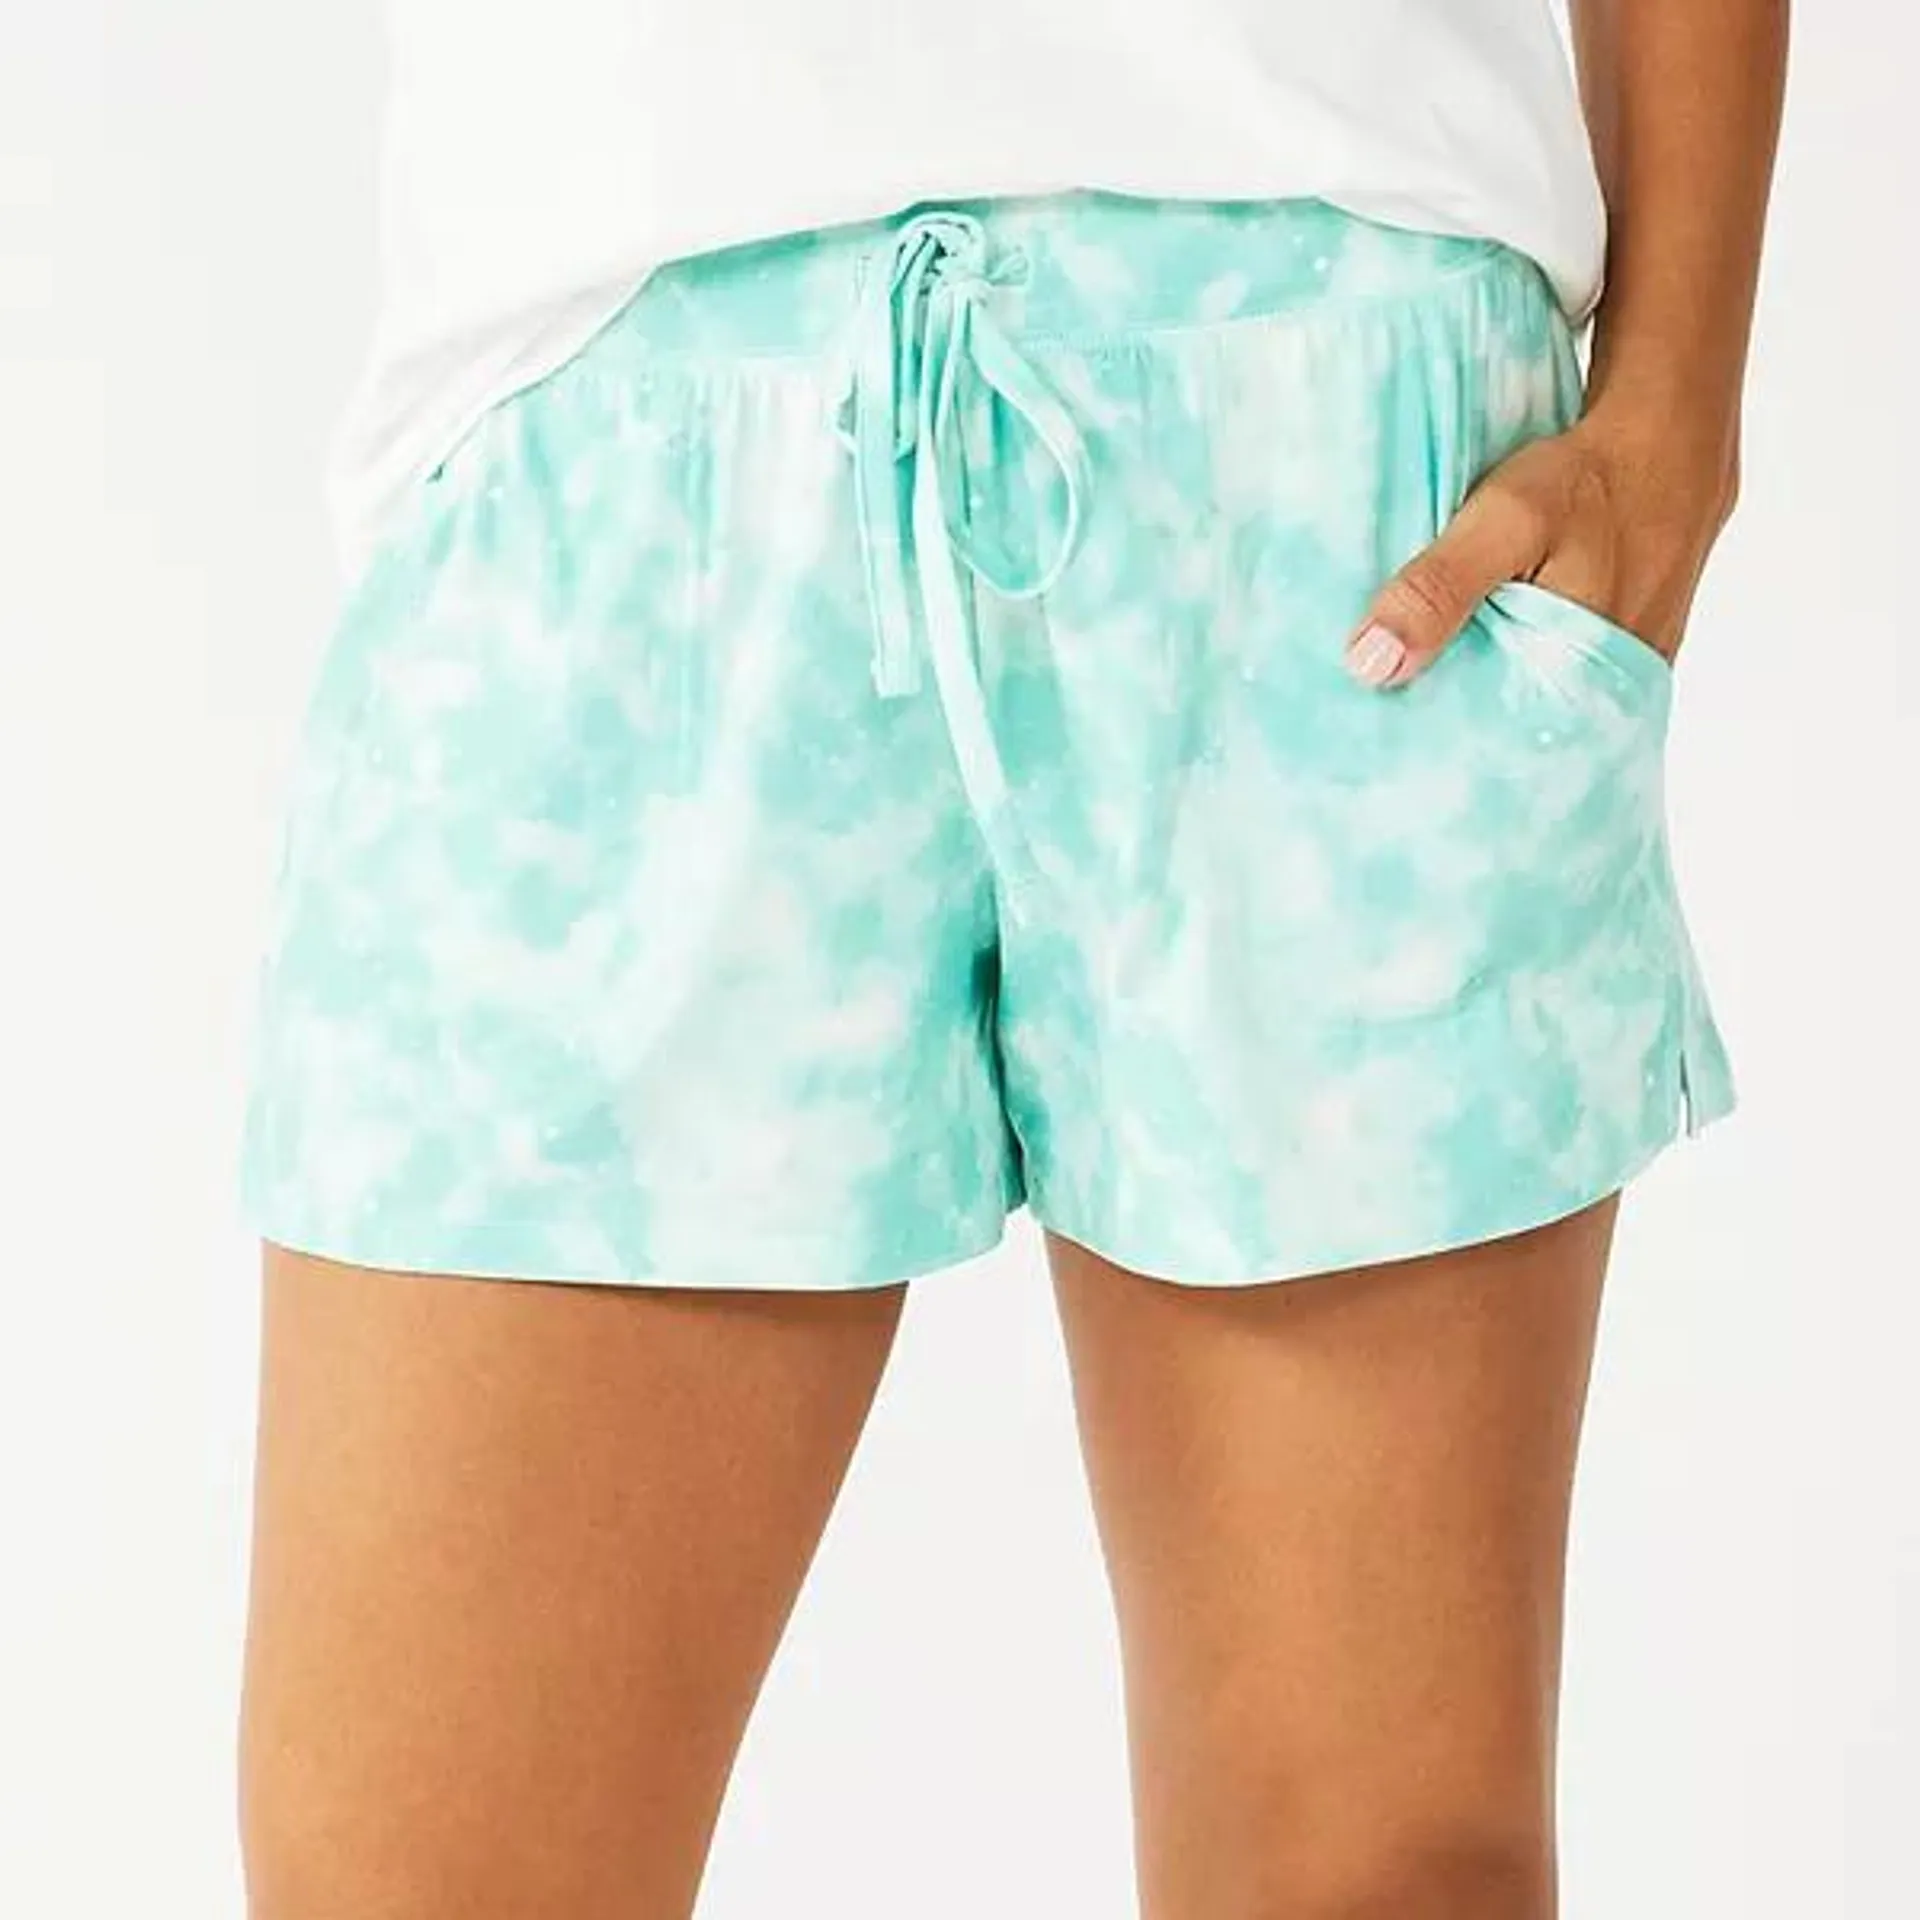 Women's Sonoma Goods For Life® Pajama Shorts